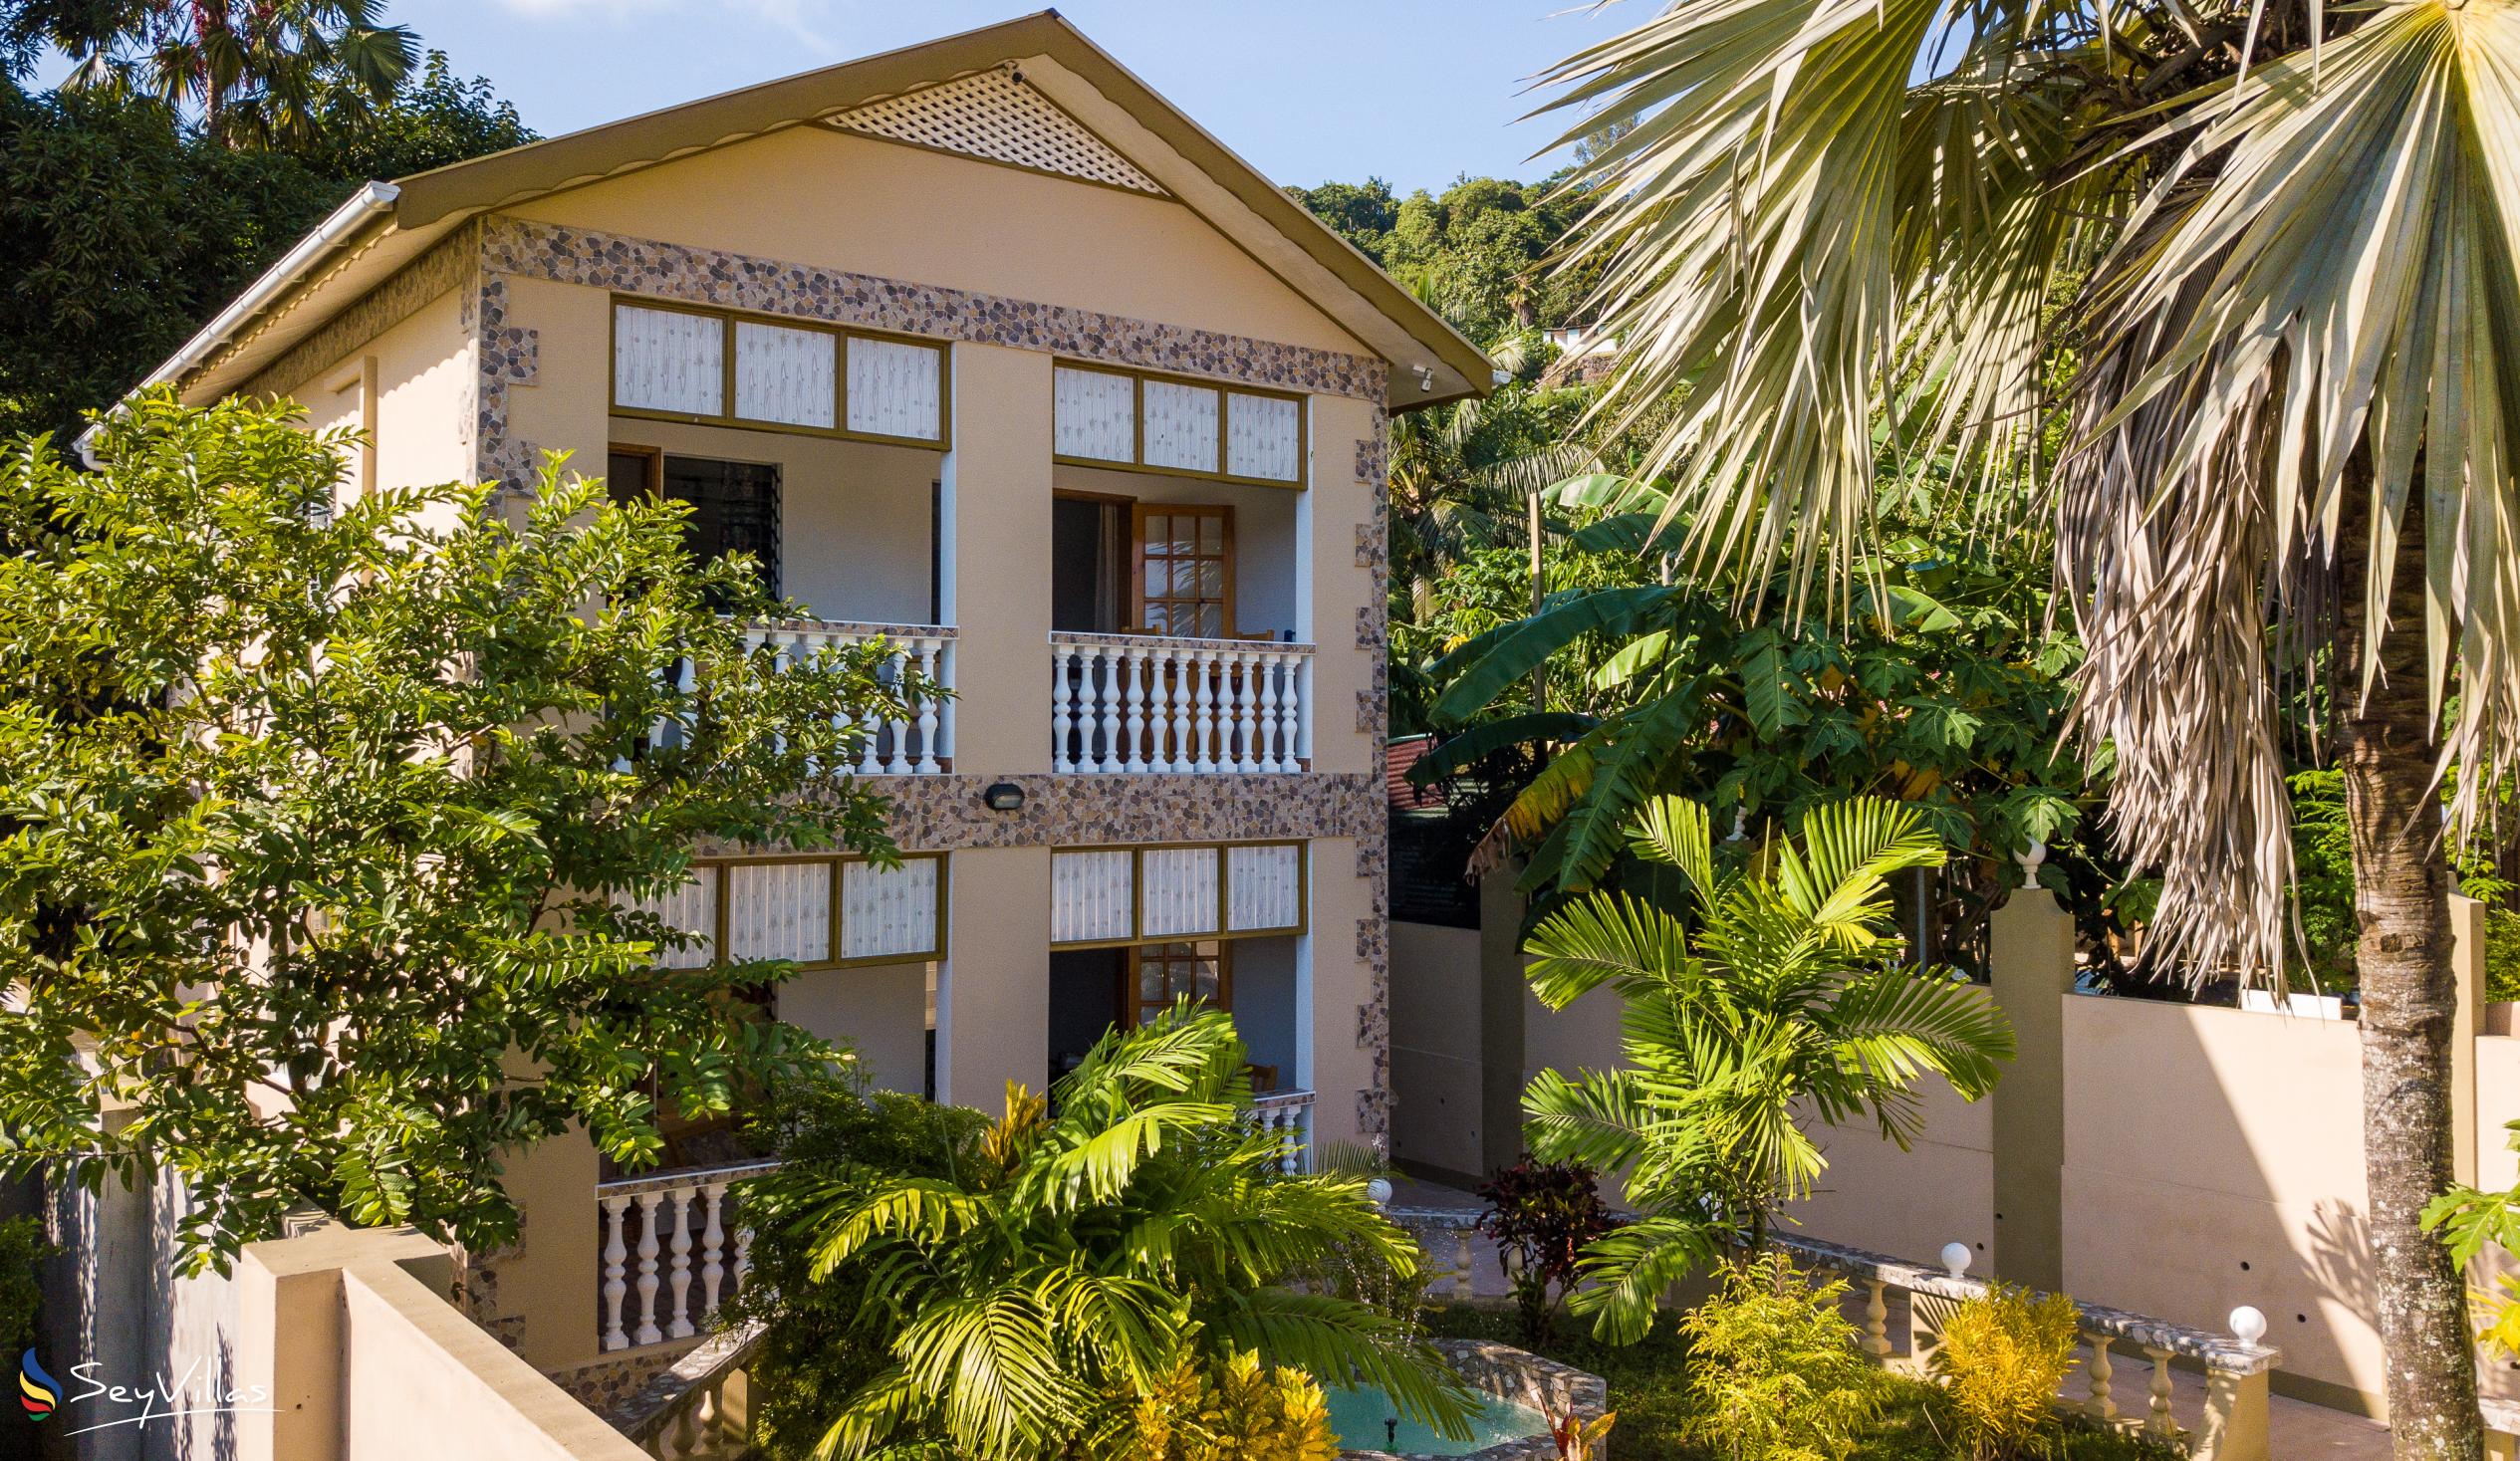 Photo 1: La Residence d'Almee - Outdoor area - Praslin (Seychelles)